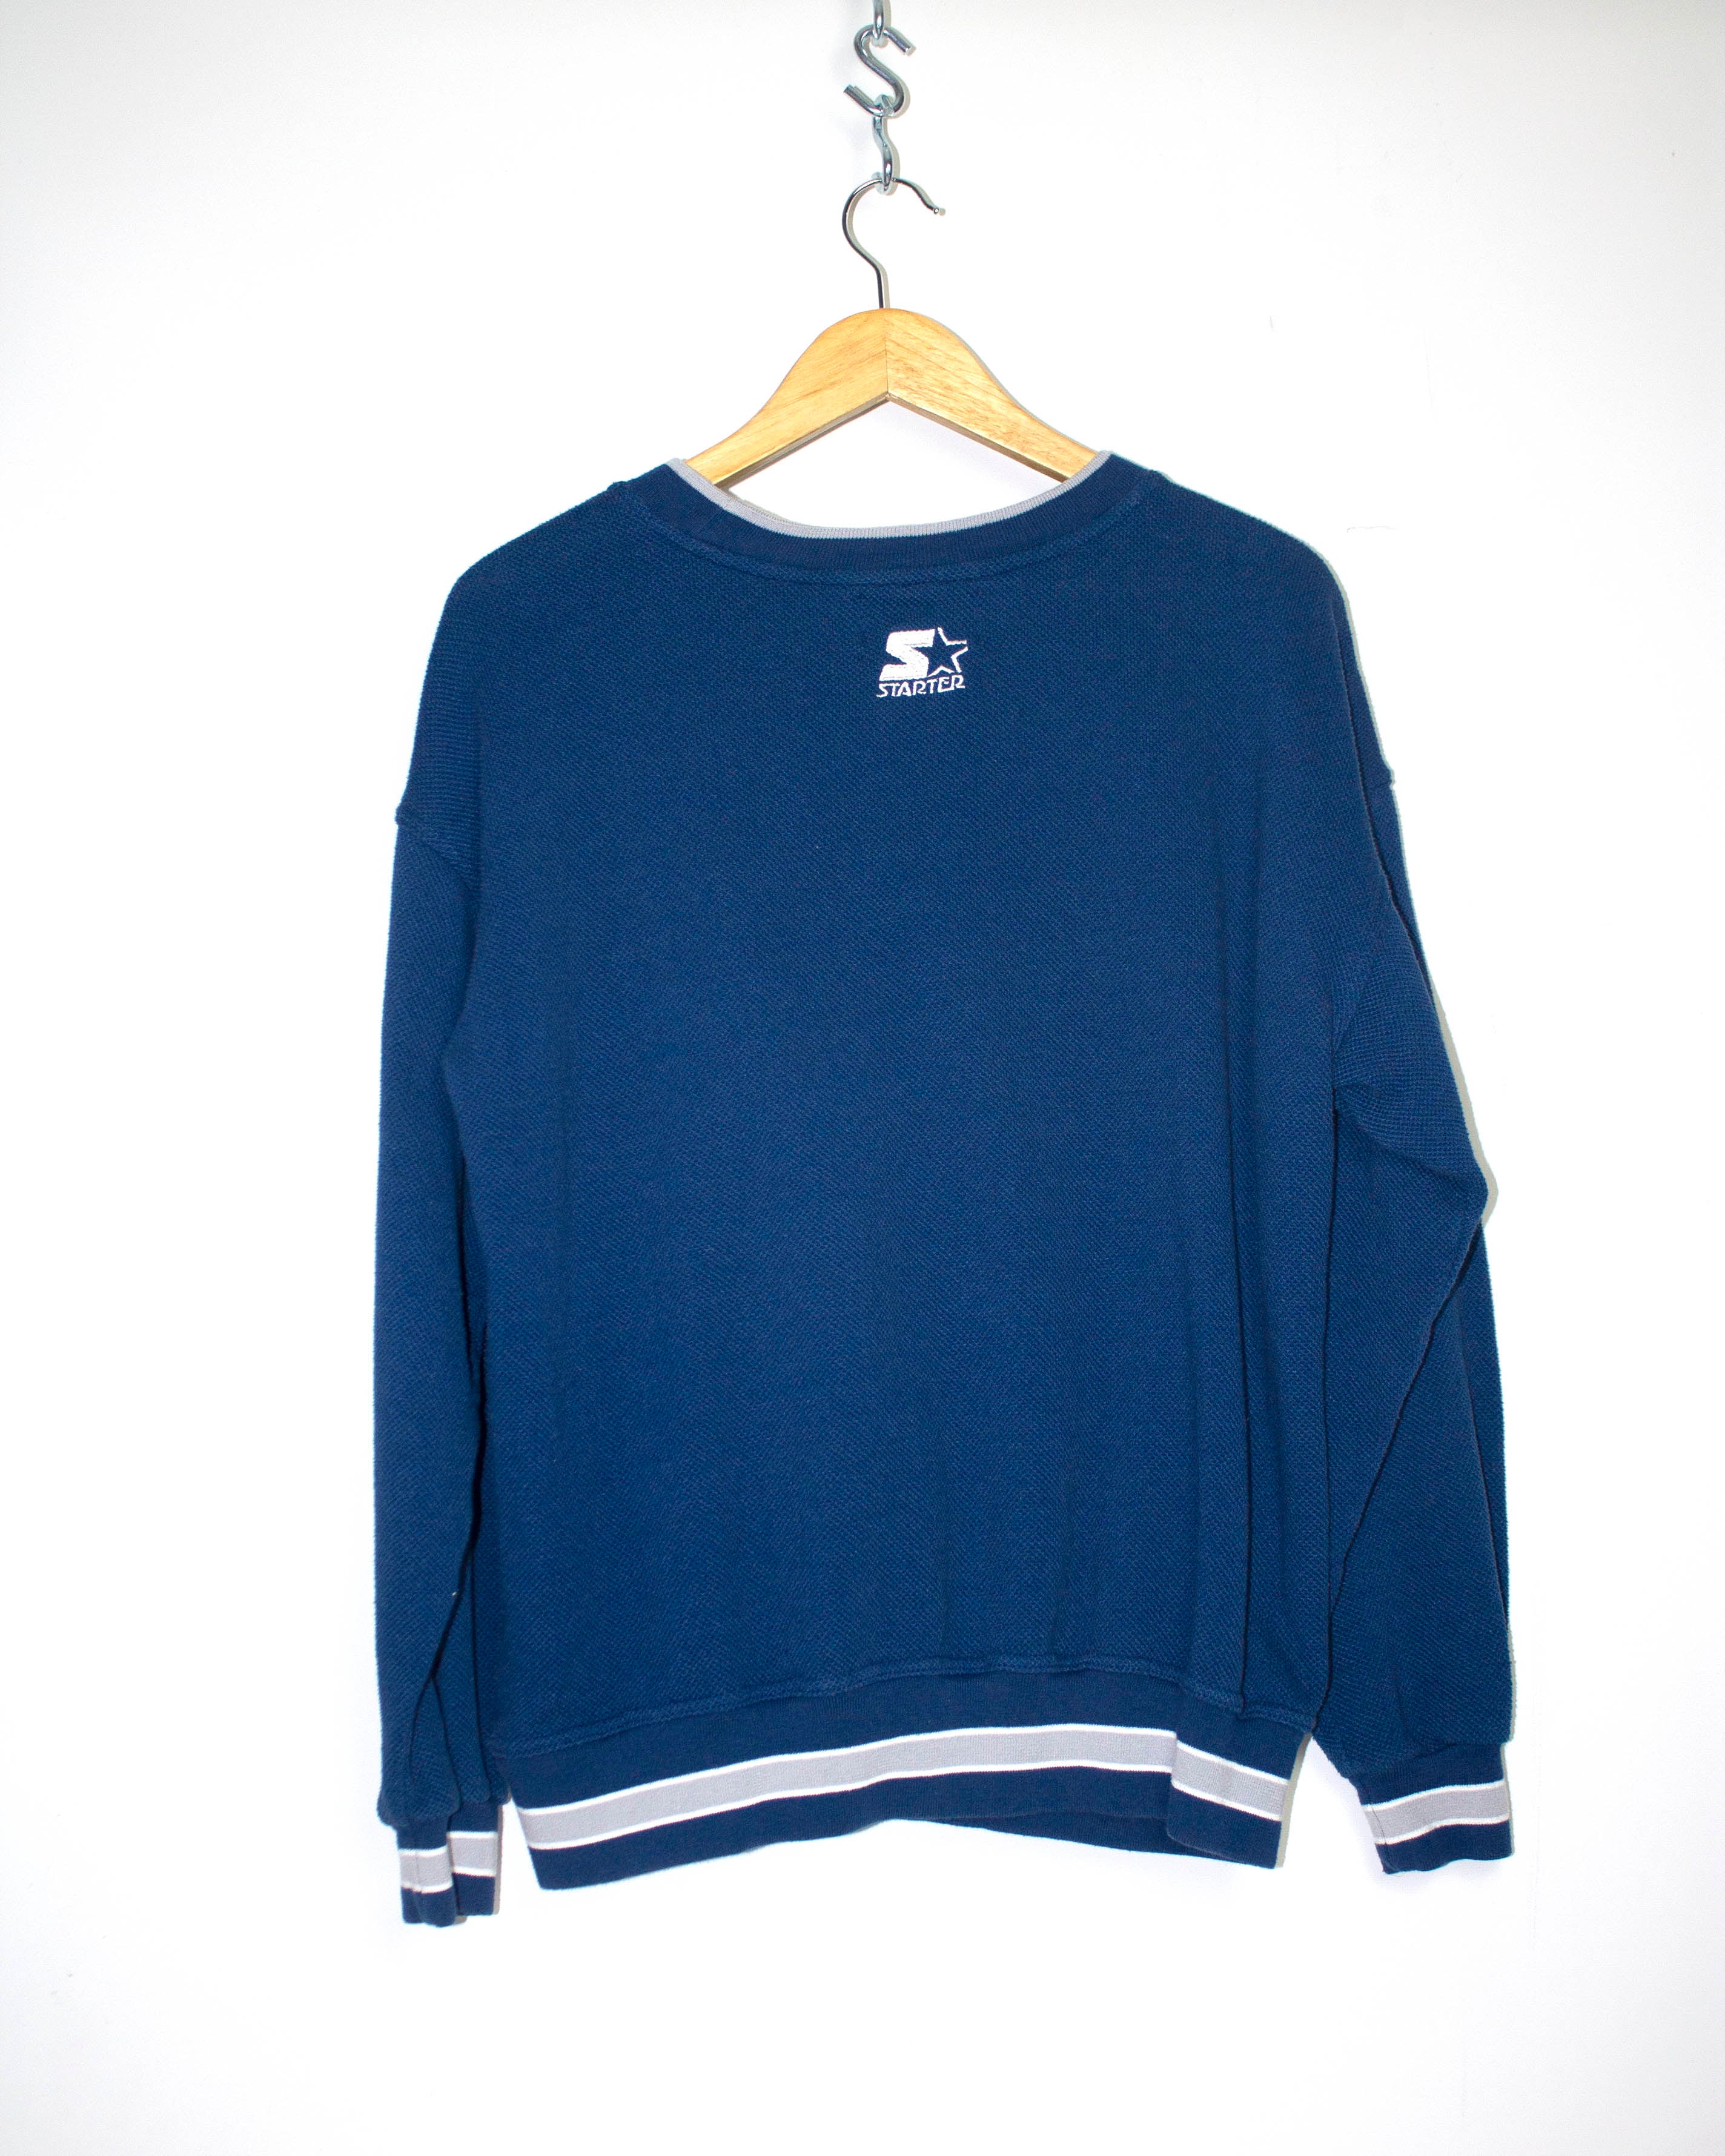 Vintage Starter Dallas Cowboys Sweatshirt Sz M